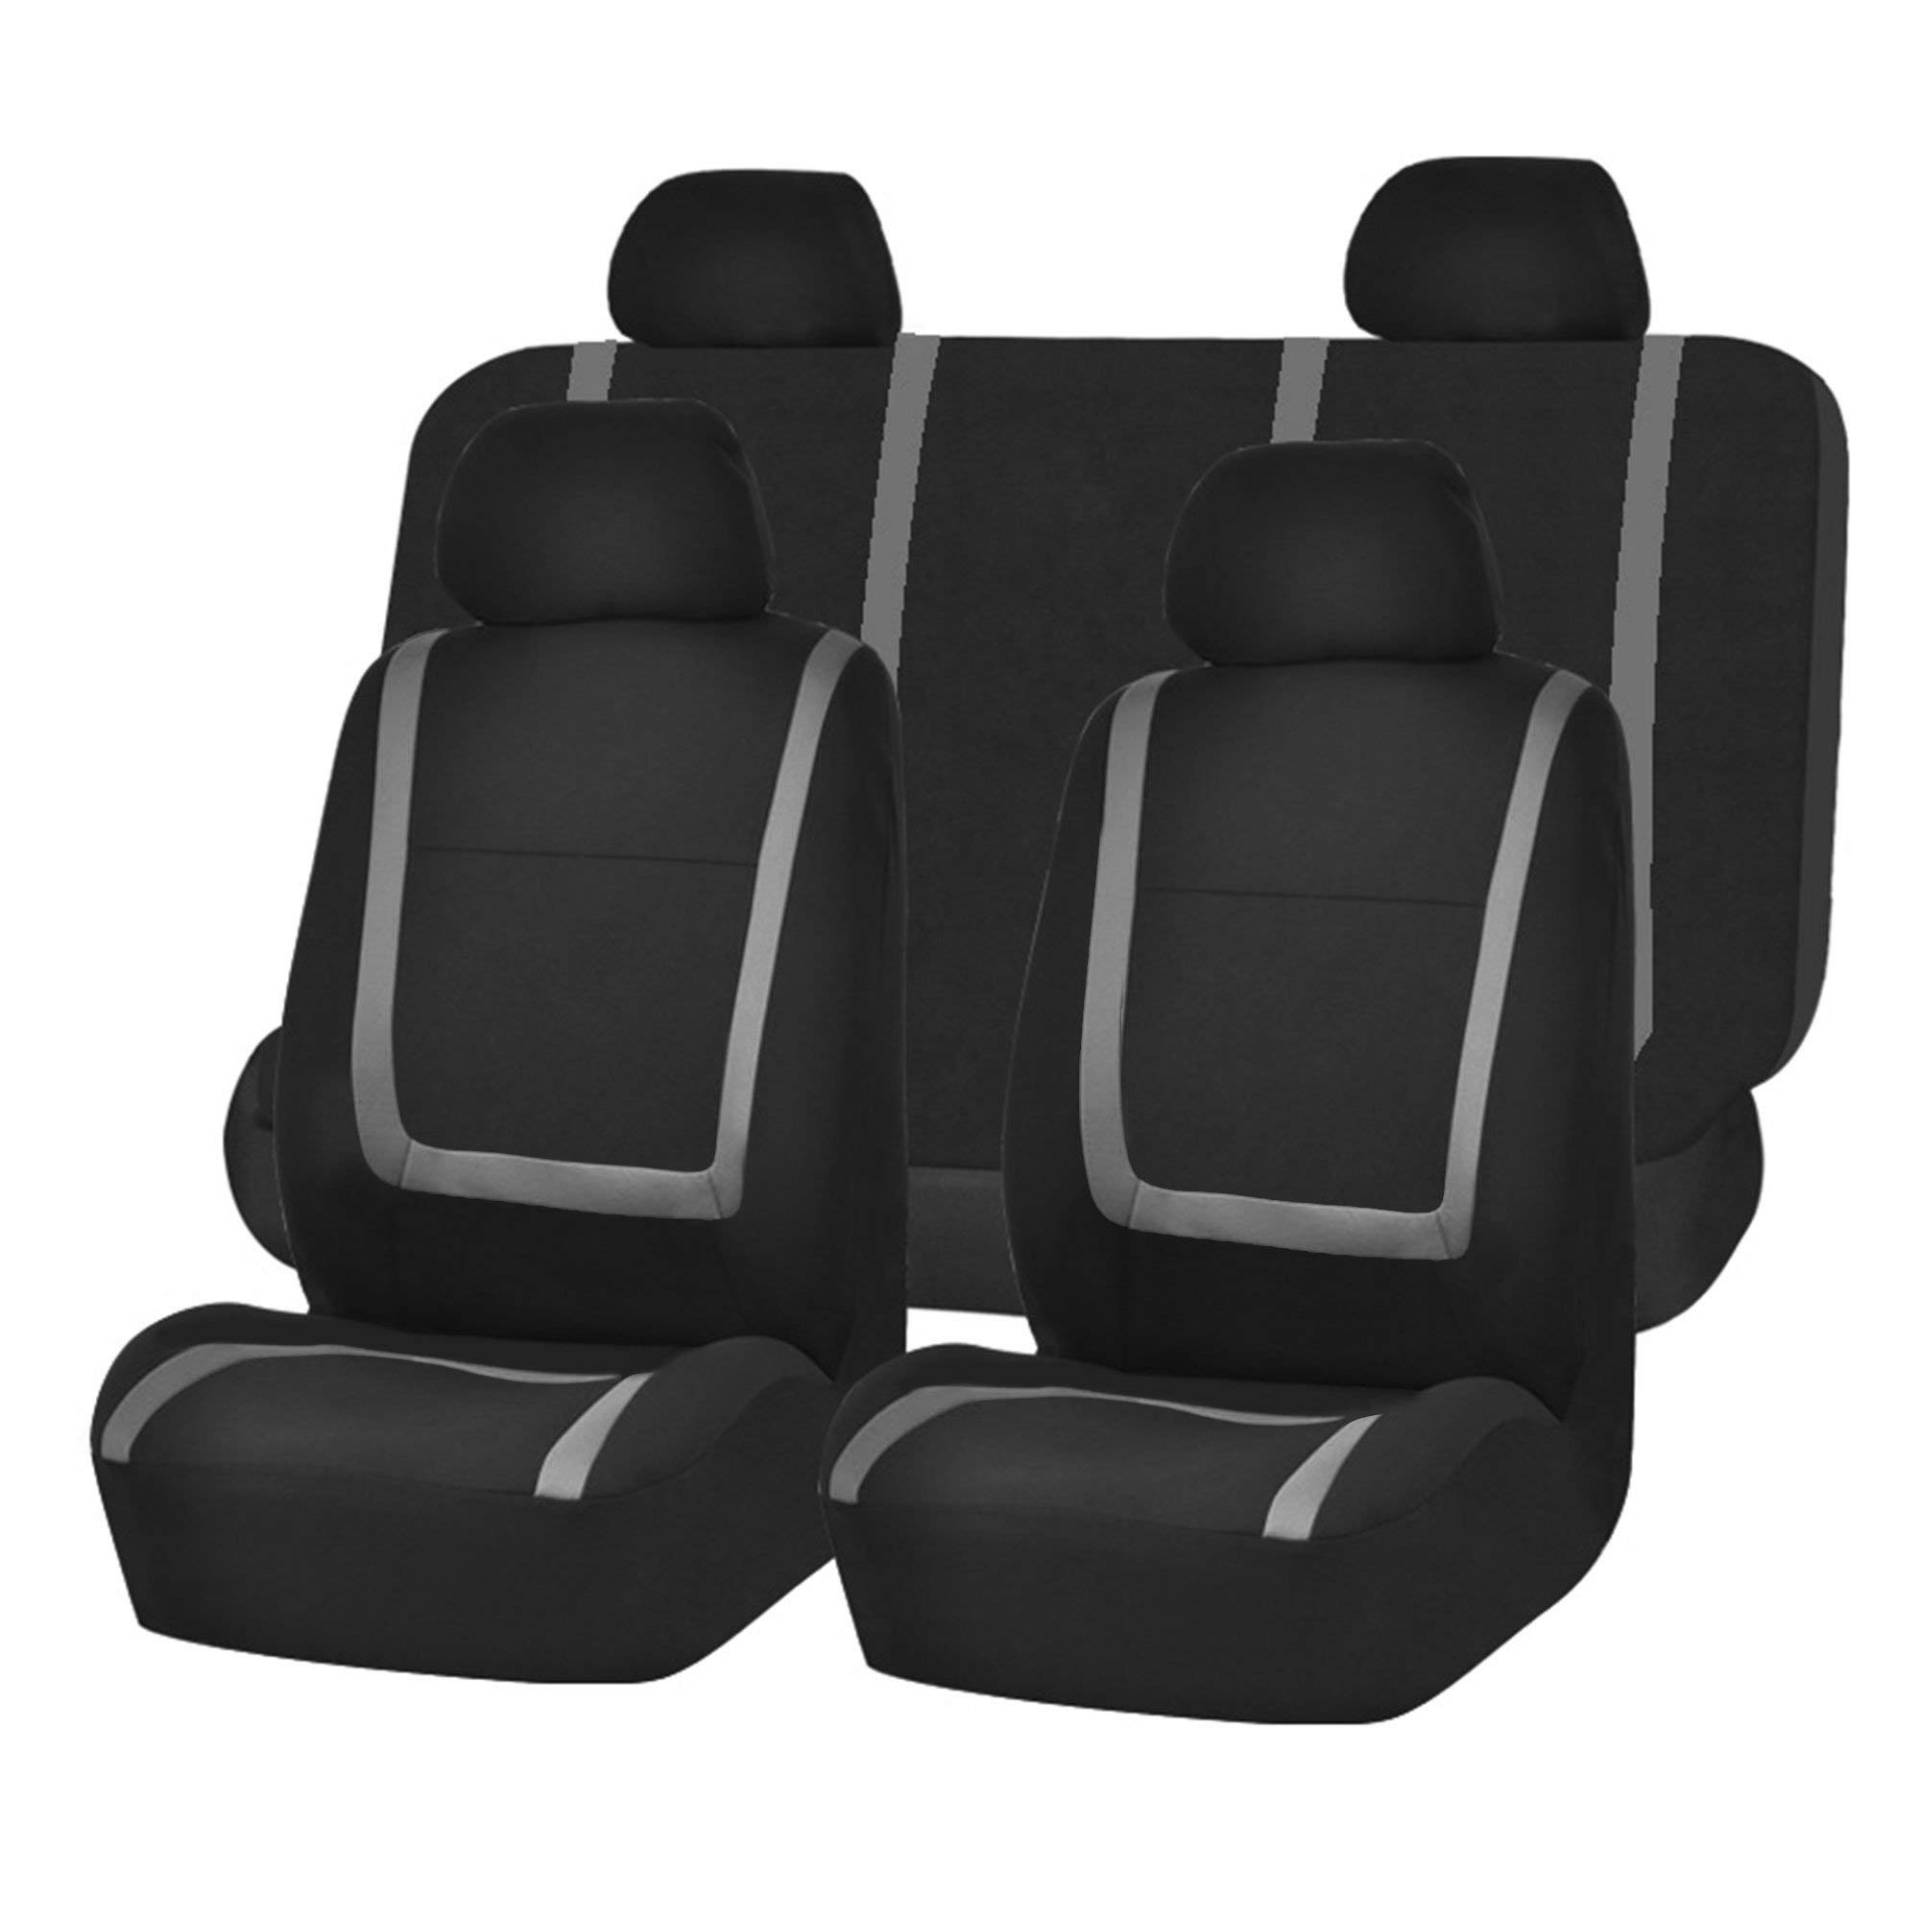 GANDUS Auto Sitzbezüge Set für Kia Stonic 2017+, Autositzbezüge Komplettset mit Airbag kompatible Atmungsaktive Bequem Polyesternetz Auto Sitzschoner Set,D-Gray von GANDUS